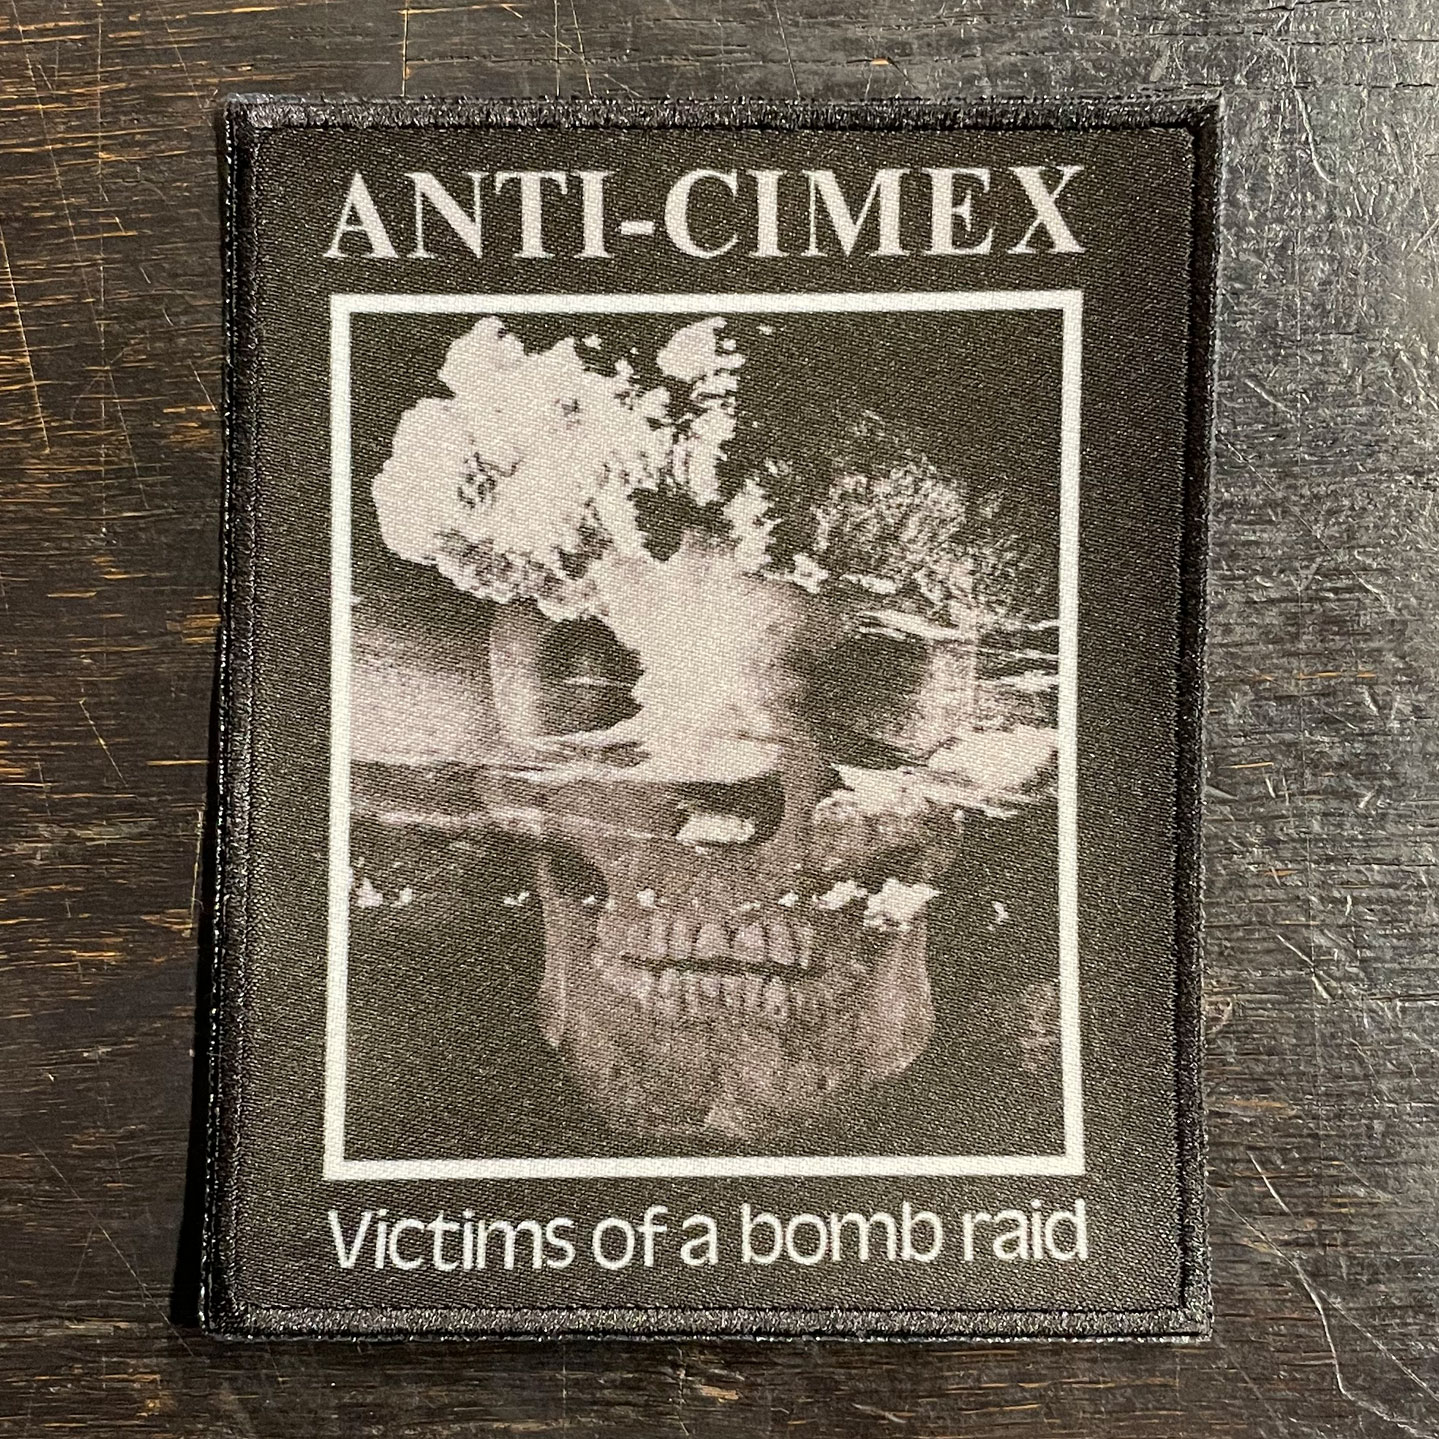 ANTI CIMEX ワッペン VICTIMS OF A BOMB RAID